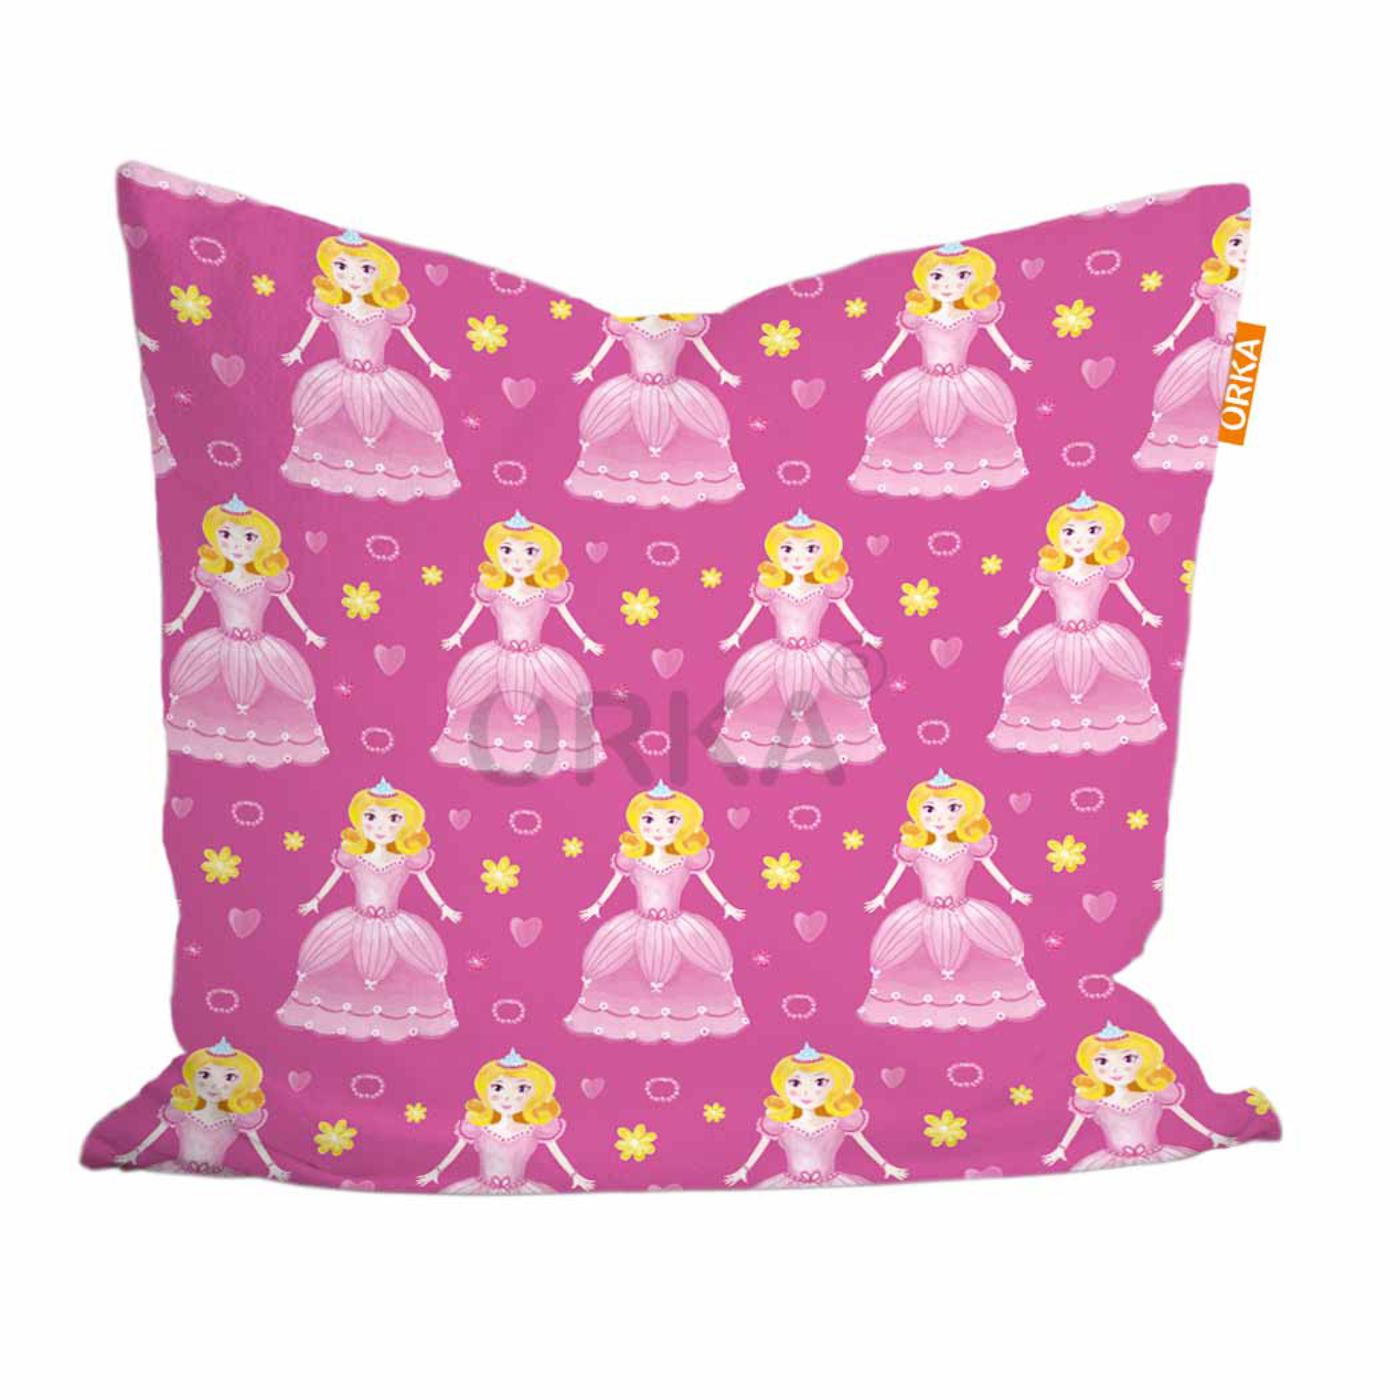 ORKA Princess Theme Digital Printed Cushion 2 14"x14" Cover Only